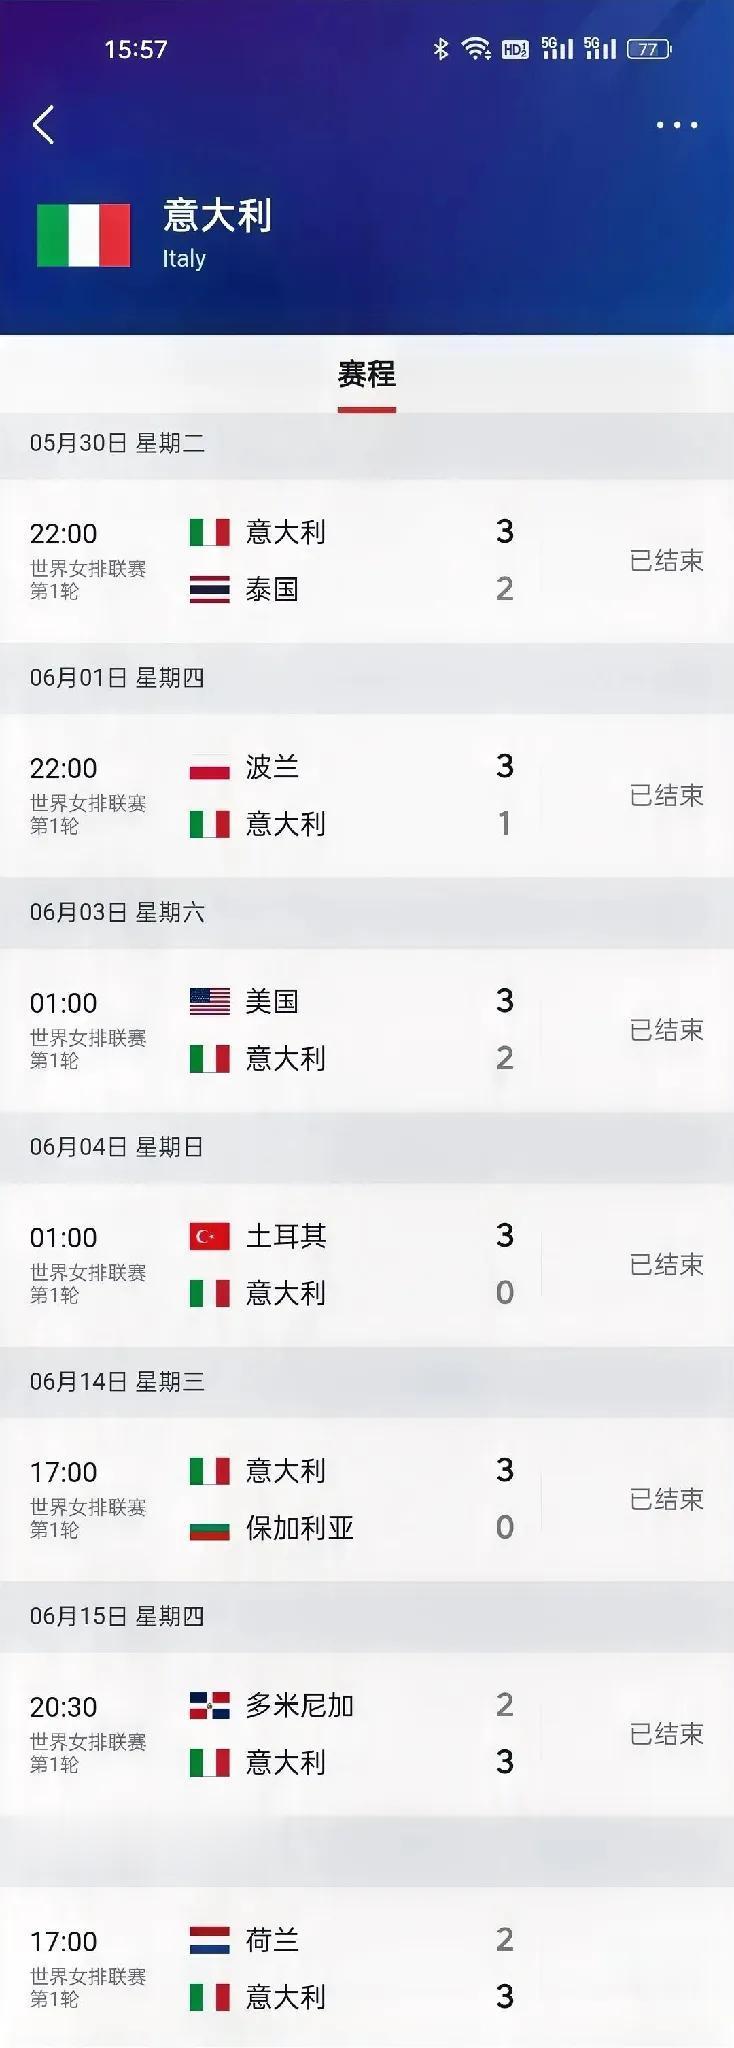 CCTV-5将在6月18日20:30将直播中国女排对阵意大利女排，赛前公布双方主(4)